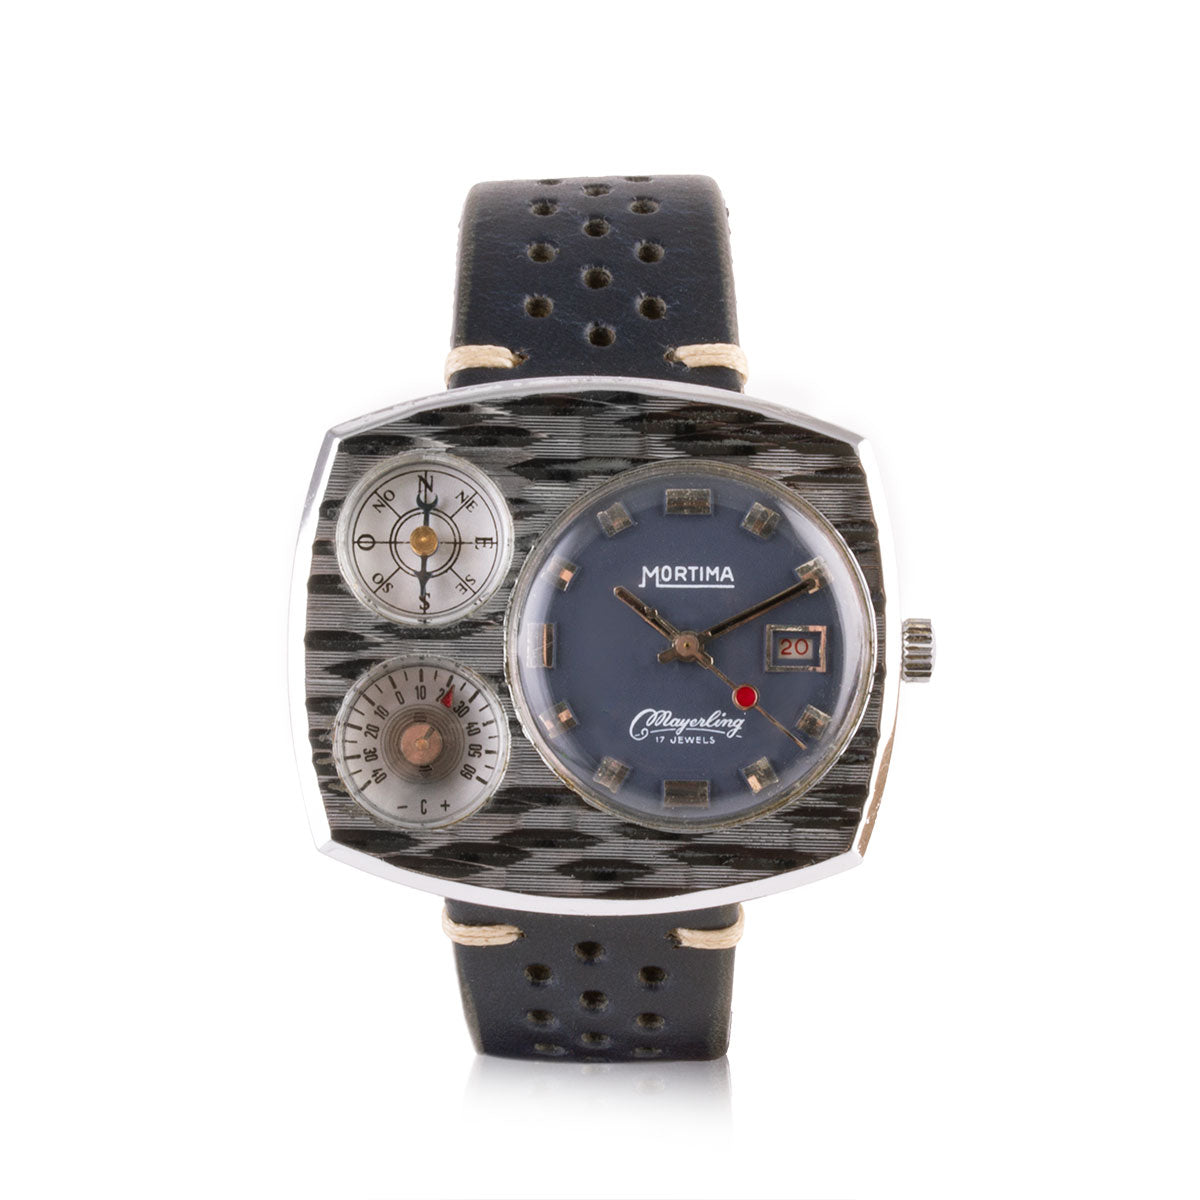 Second-hand watch - Mortima - 1200€